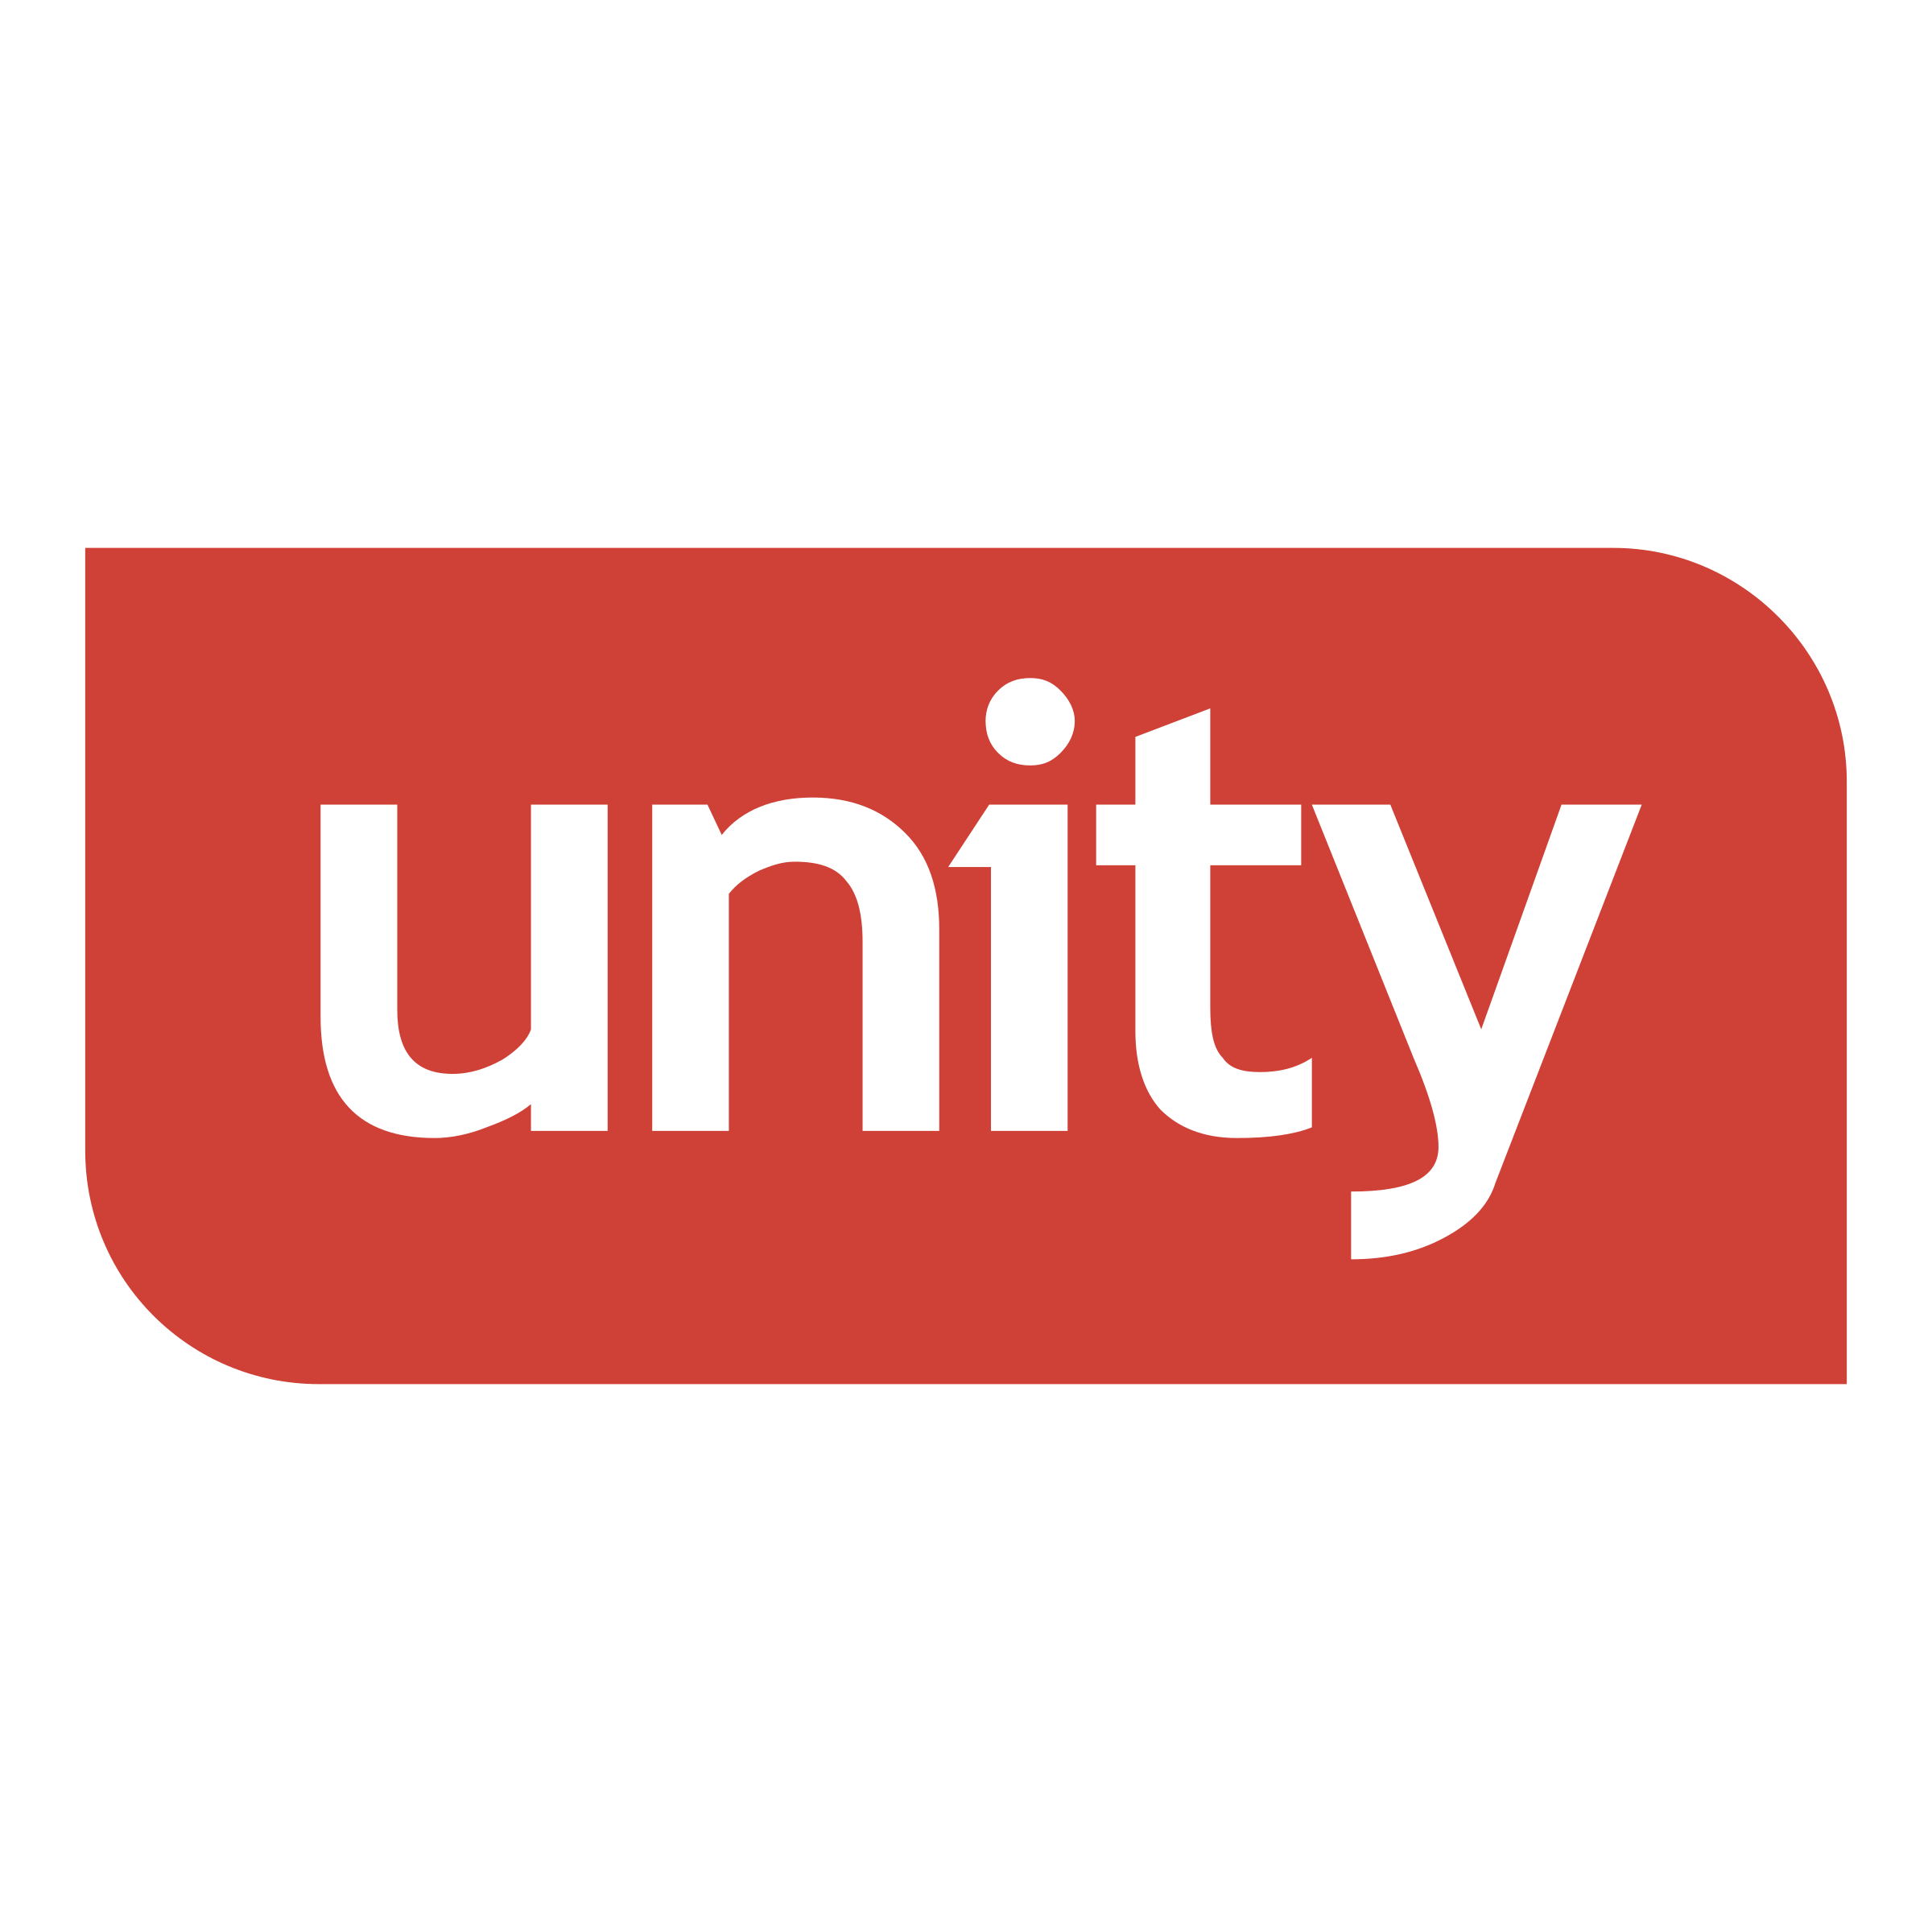 Unity Logo - Unity Logo PNG Transparent & SVG Vector - Freebie Supply